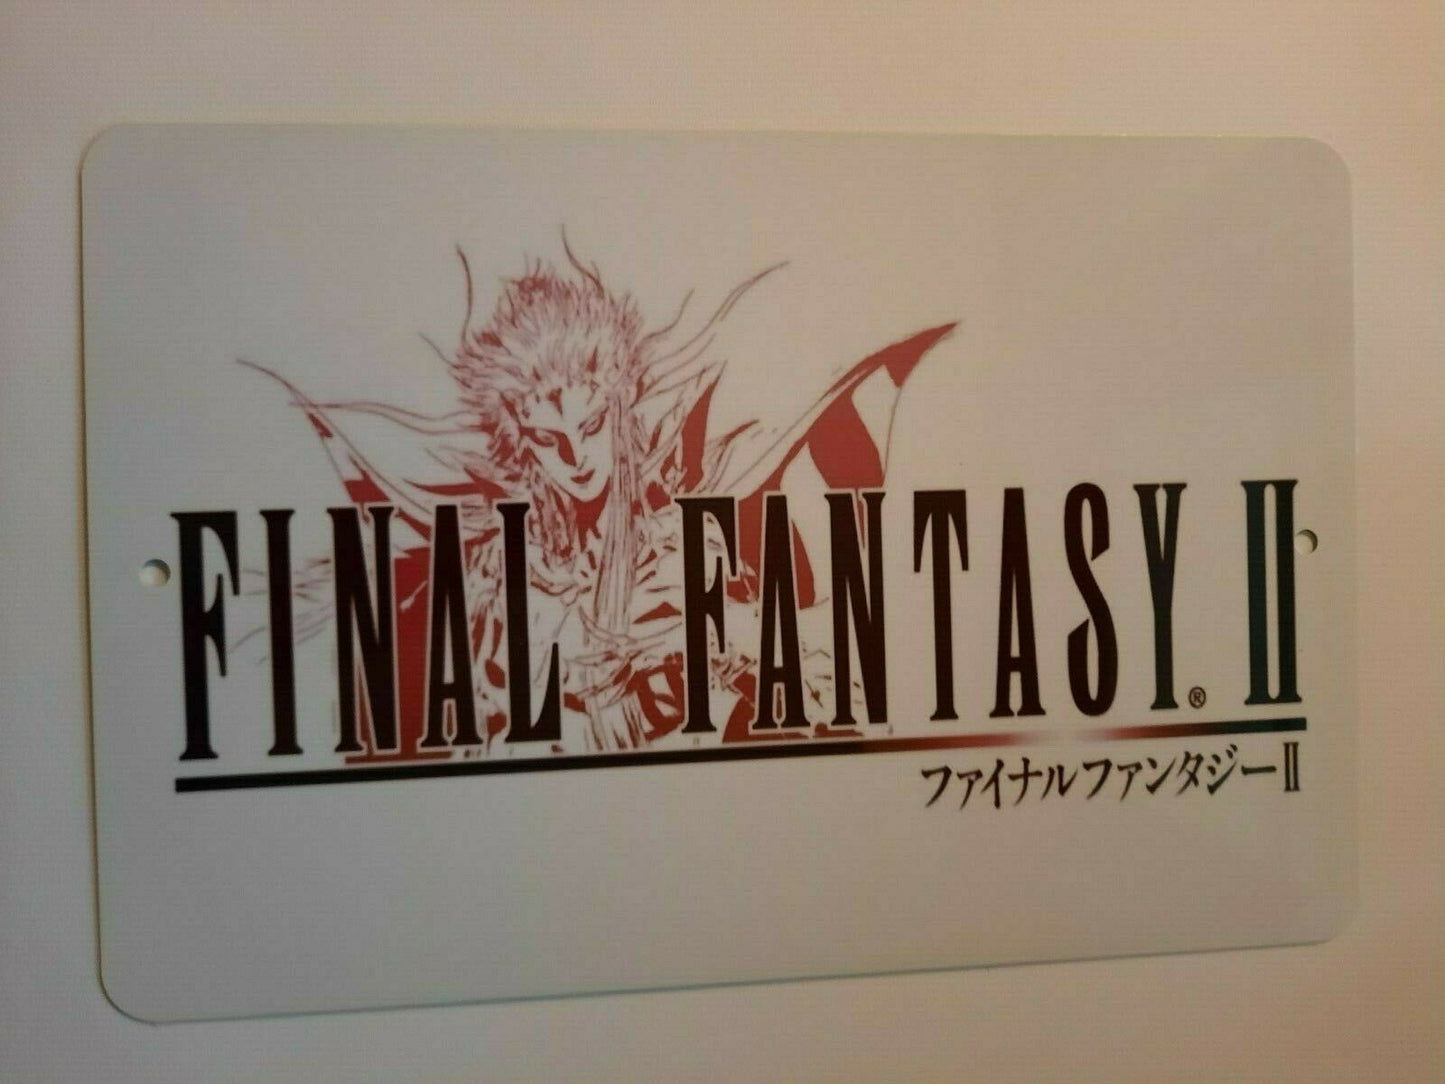 Final Fantasy 2 FFII Video Game 8x12 Metal Wall Sign Arcade